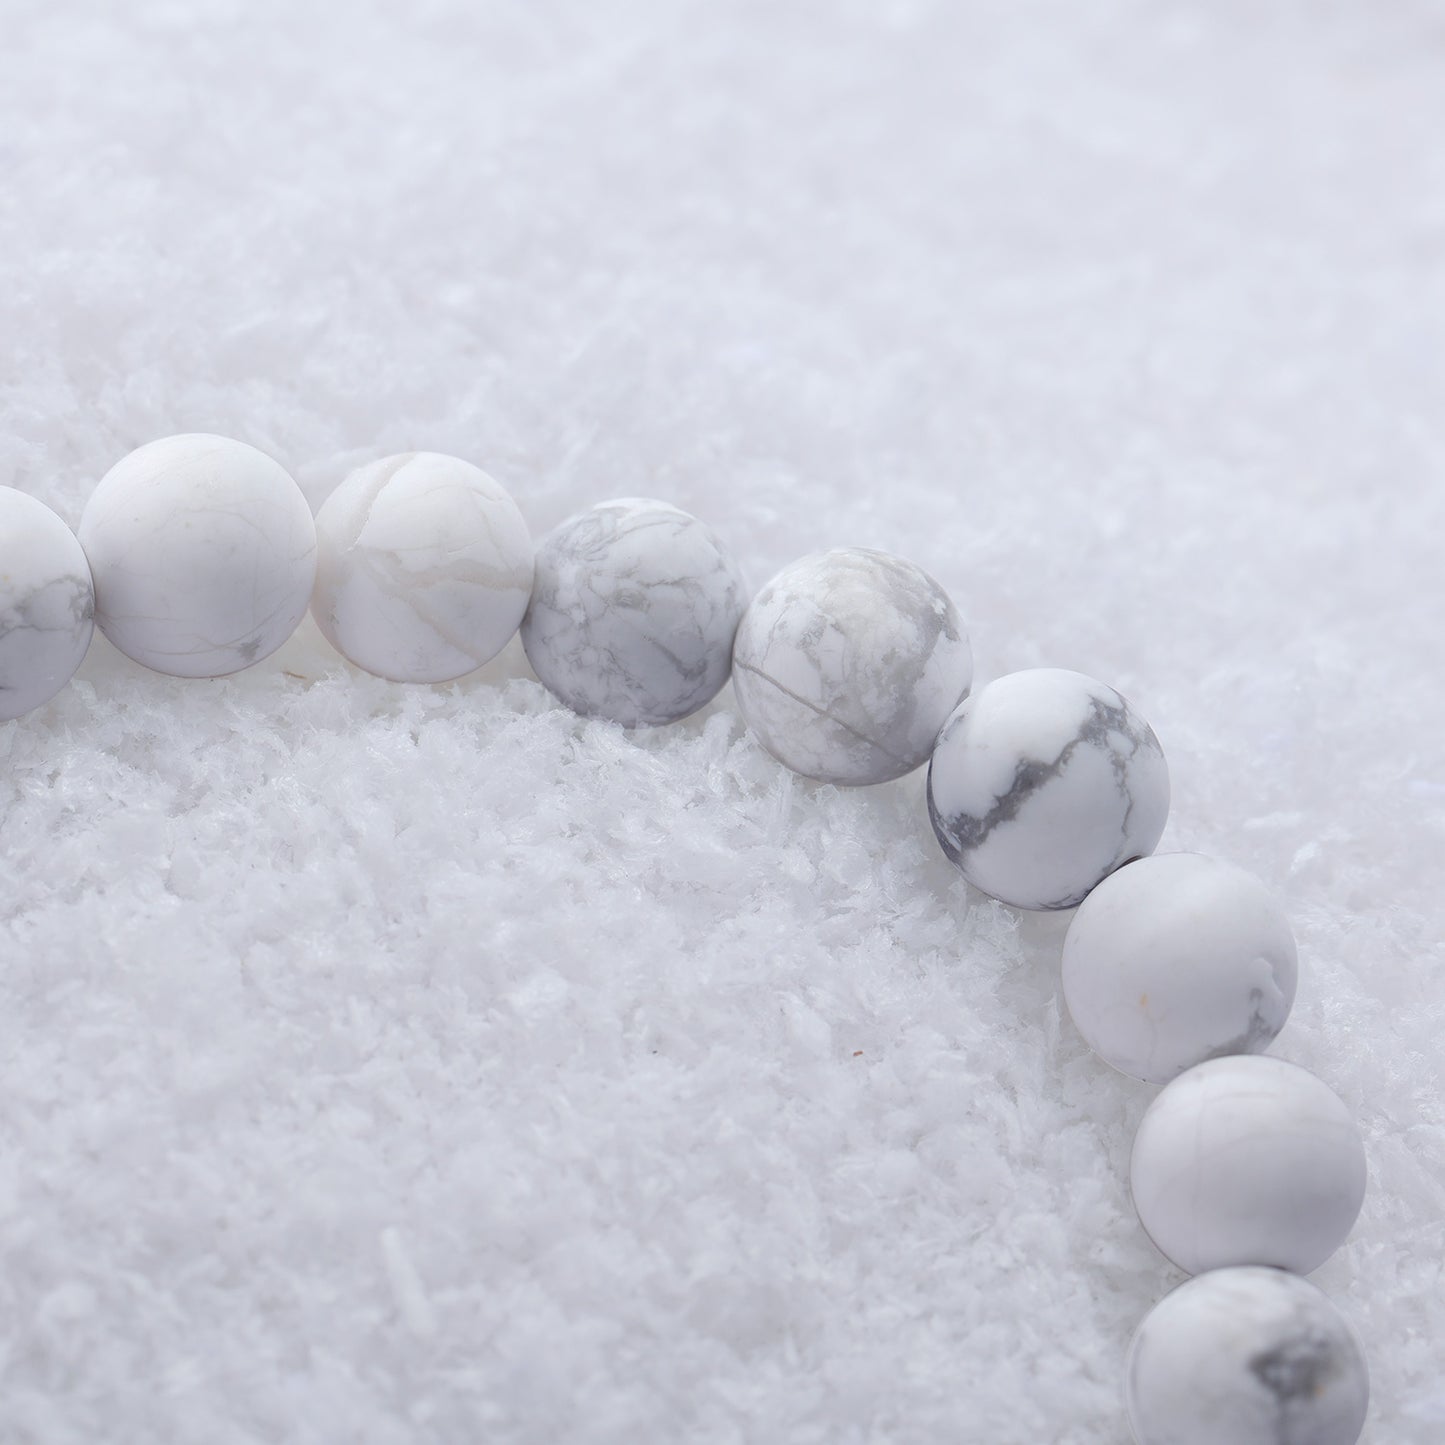 KINGKA White Turquoise Bead Bracelet, Silver, The Earth - KINGKA Jewelry